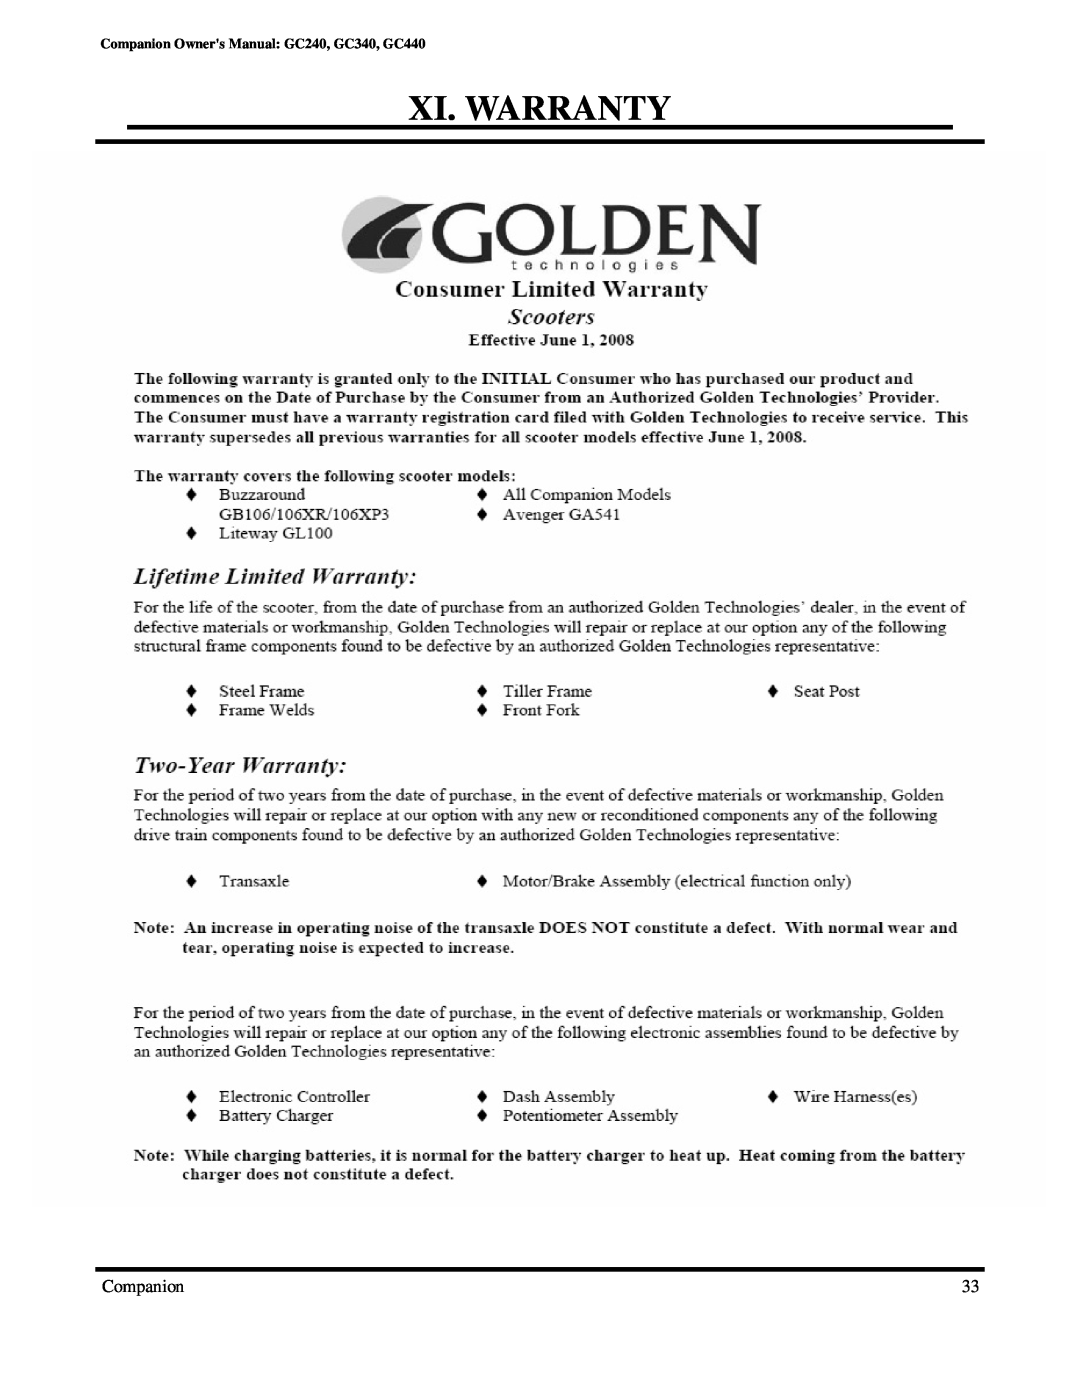 Golden Technologies owner manual Xi. Warranty, Companion Owners Manual GC240, GC340, GC440 